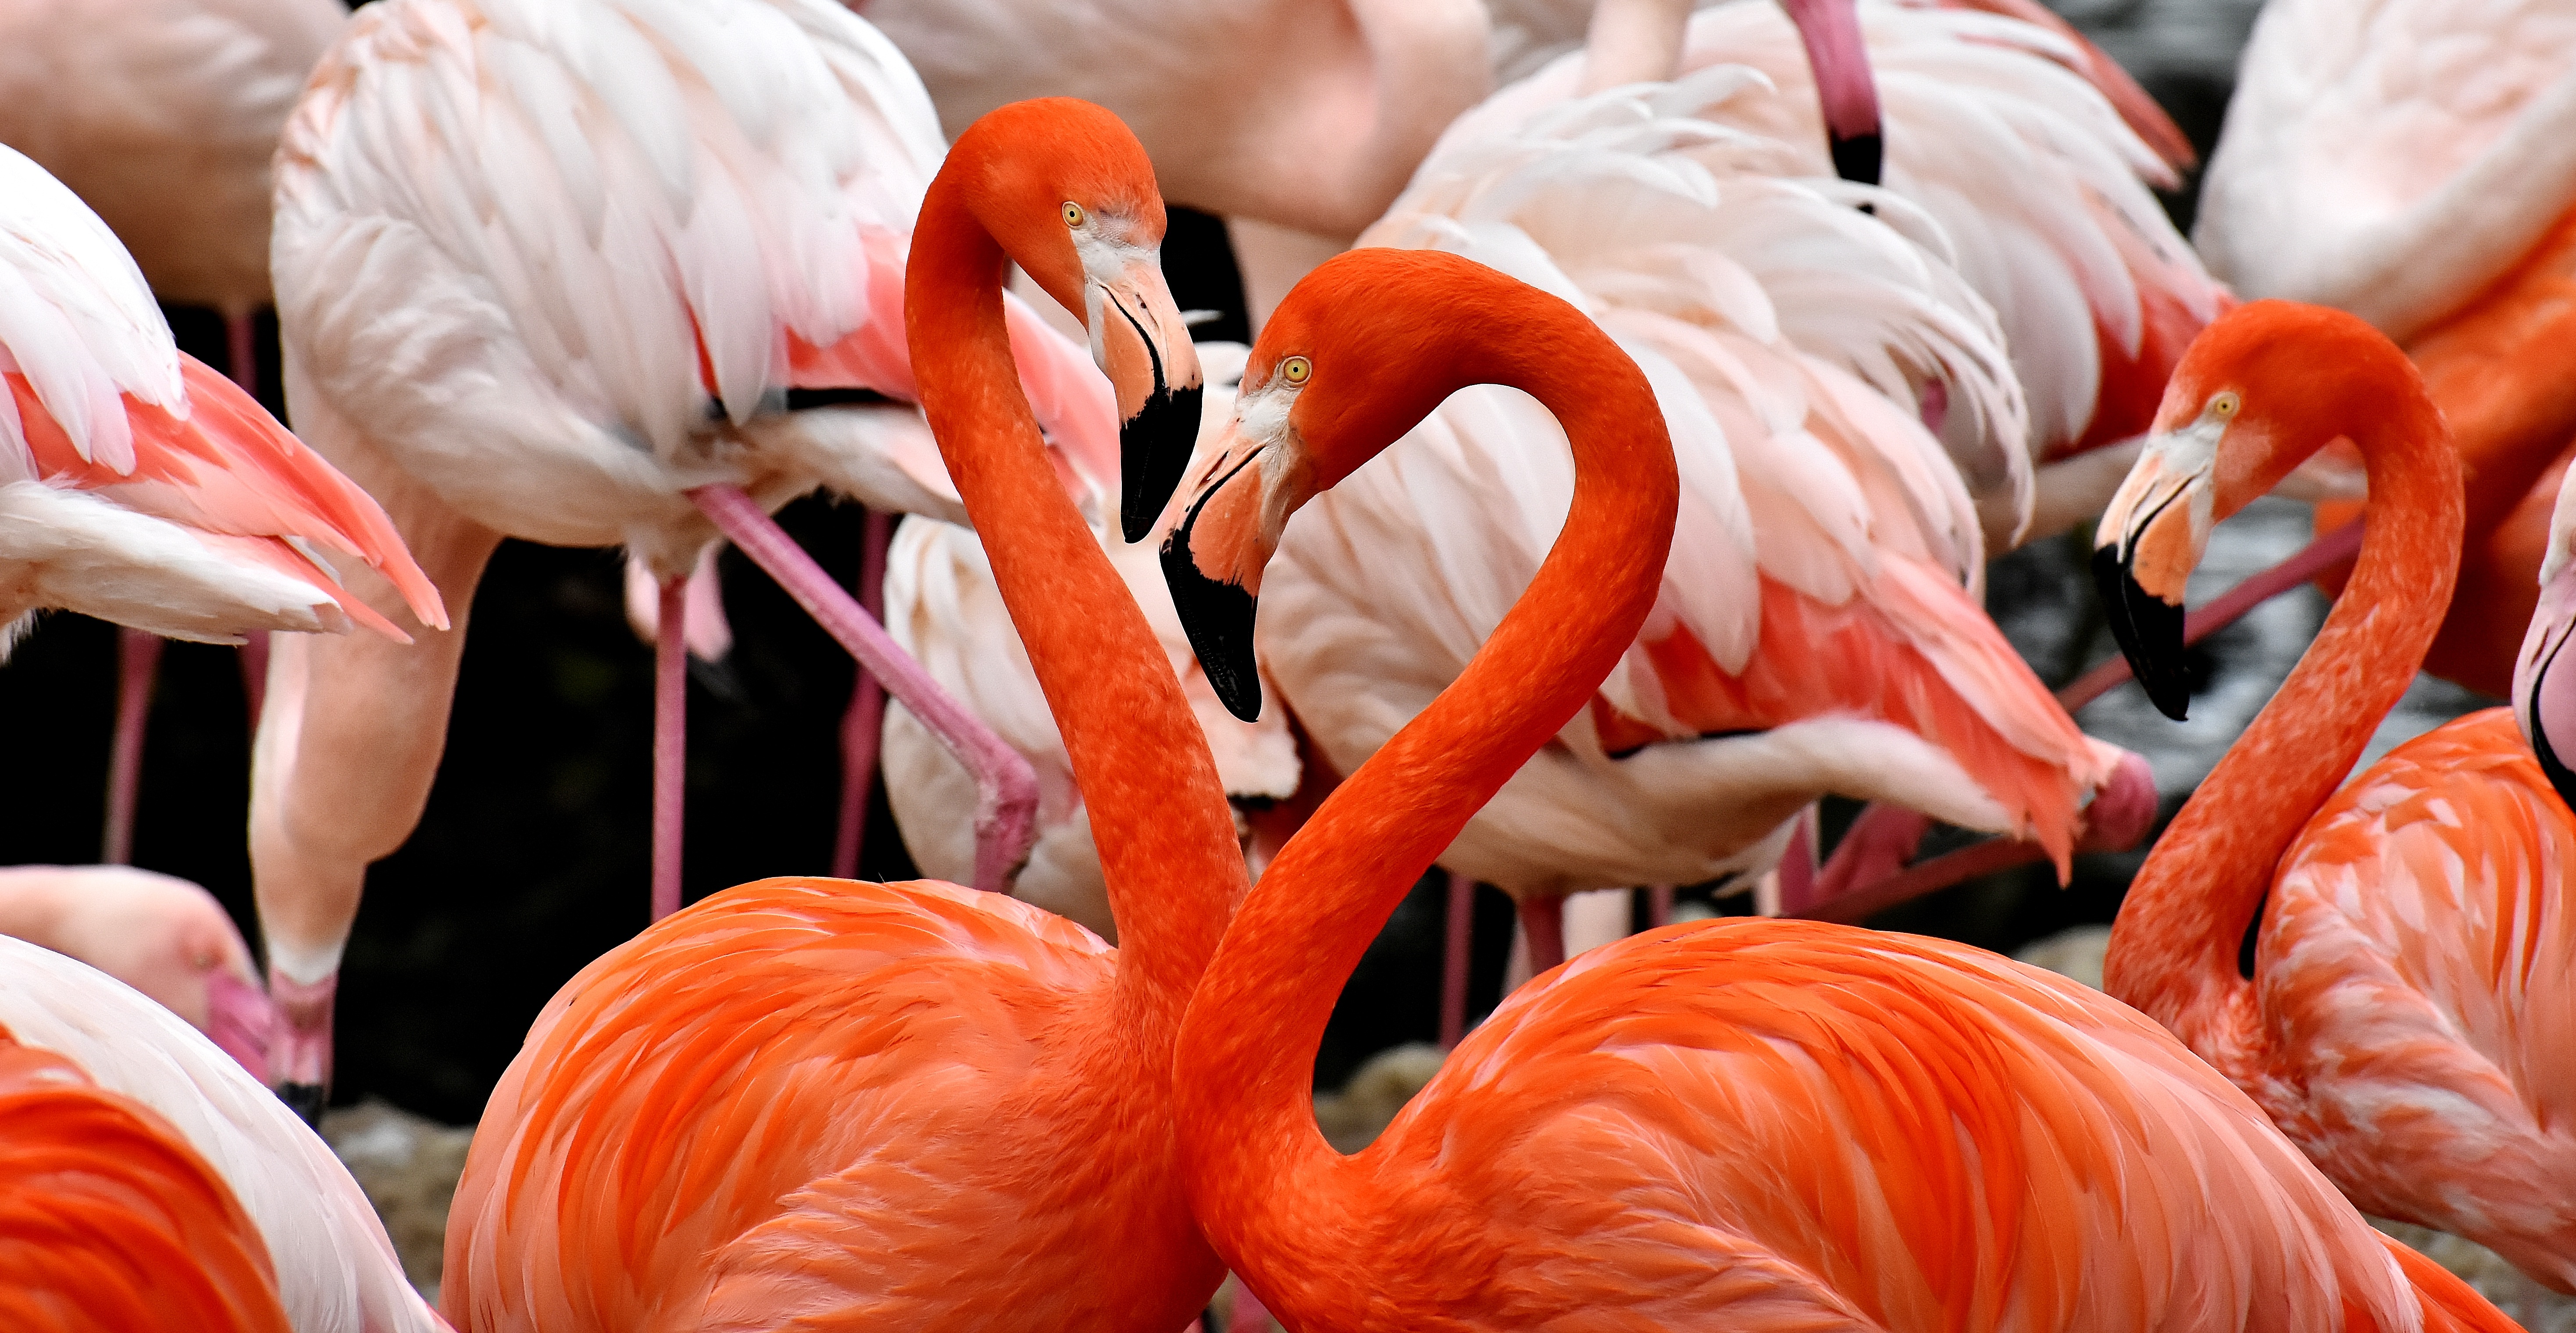 152128 Hintergrundbild herunterladen flamingo, feder, tiere, vögel, bunt, bunten - Bildschirmschoner und Bilder kostenlos